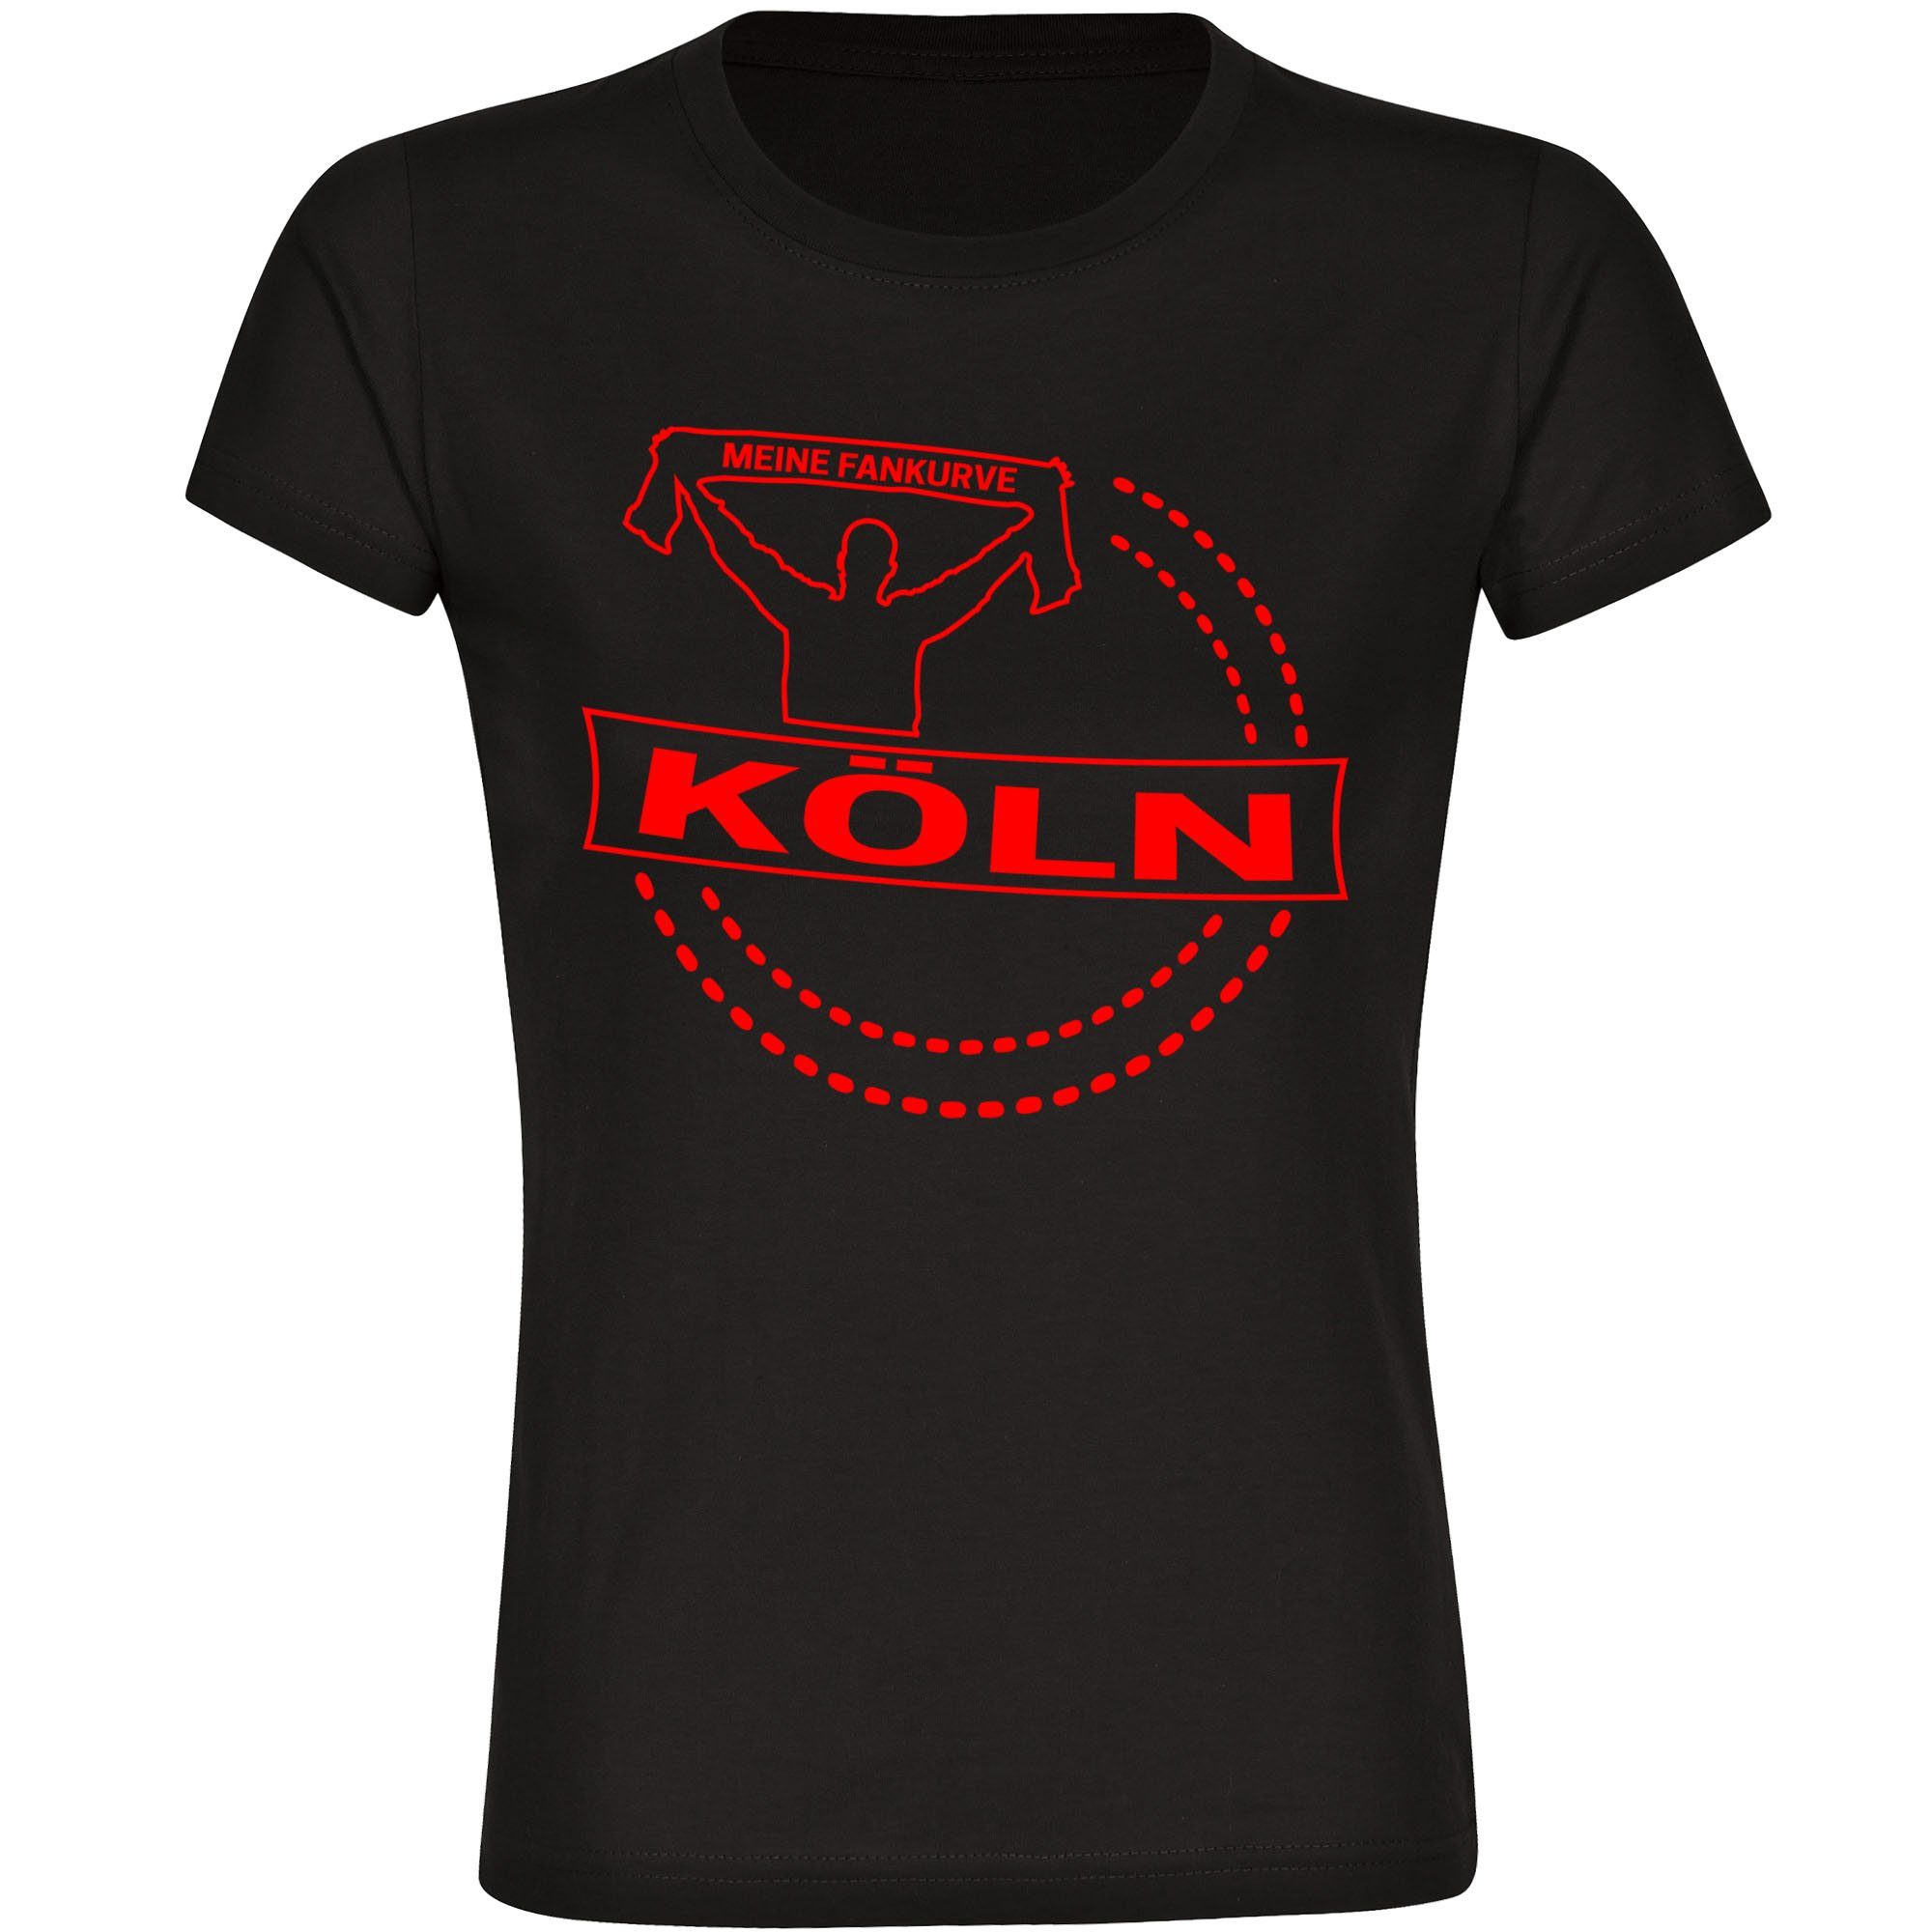 multifanshop T-Shirt Damen Köln - Meine Fankurve - Frauen